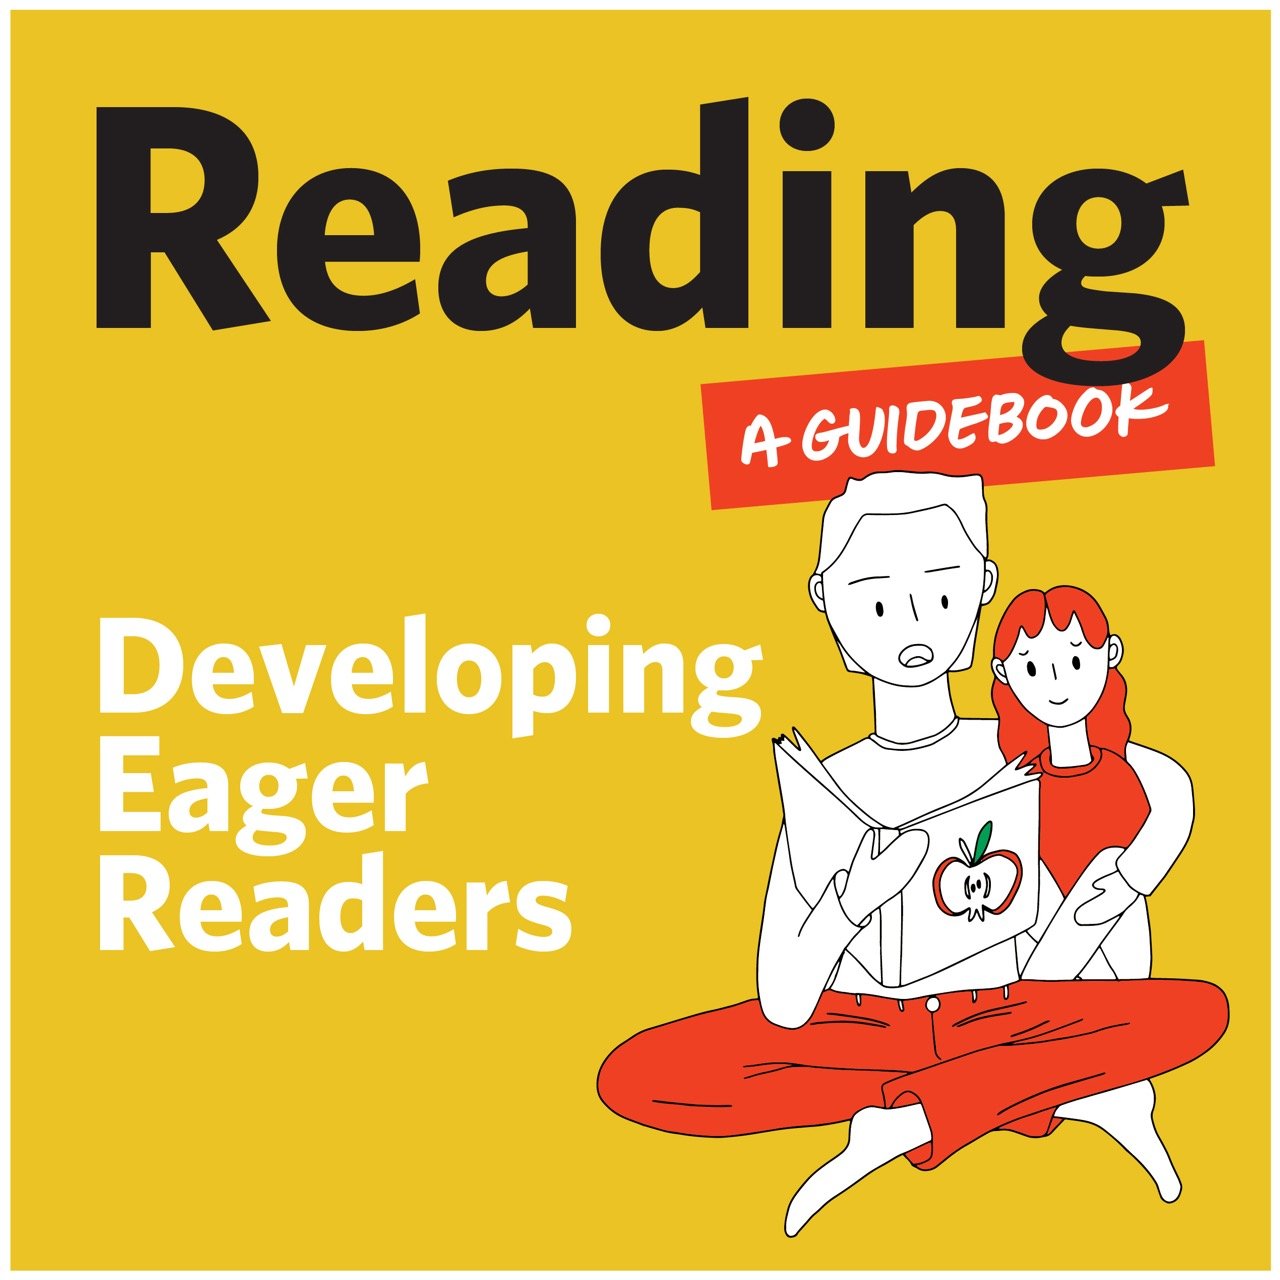 Developing Eager Readers blog link